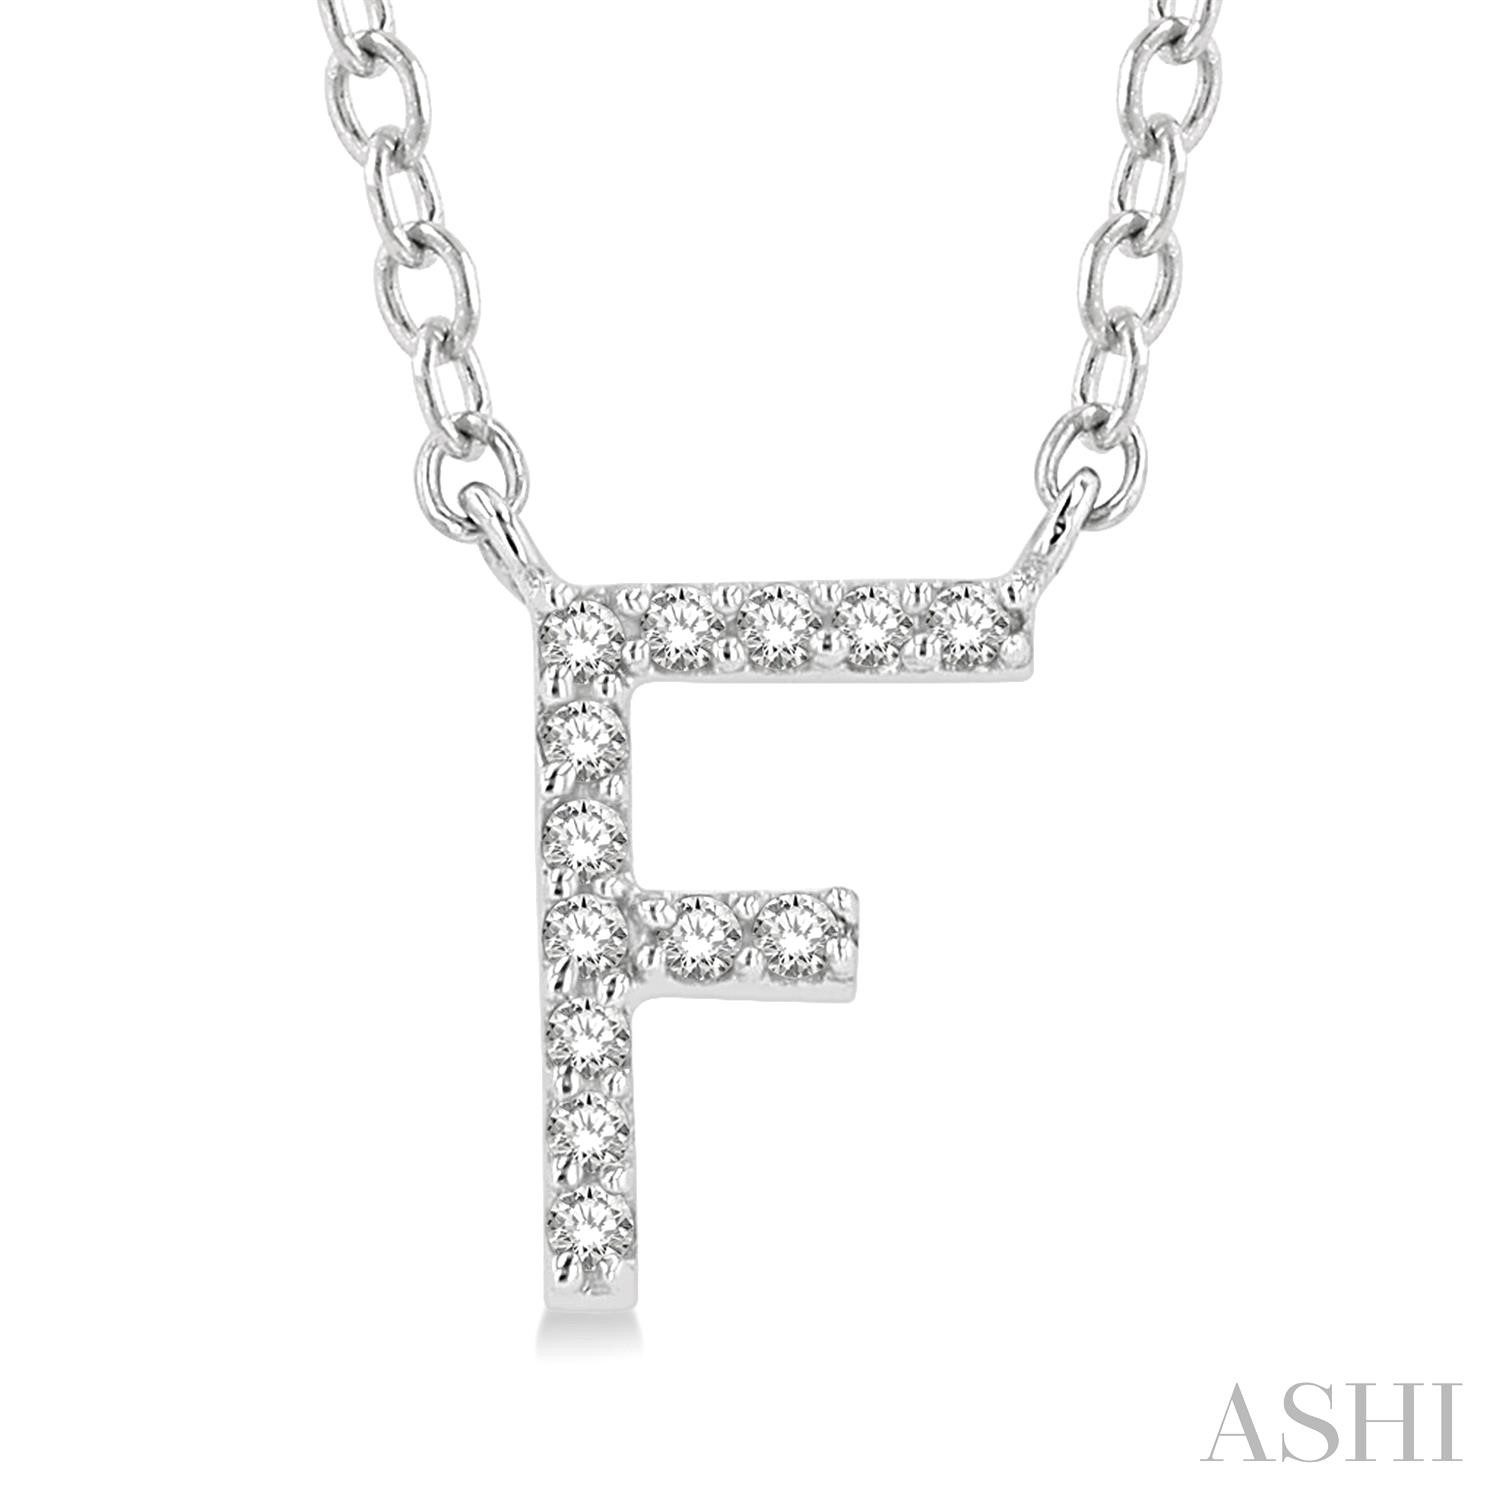 10 Karat White Gold Pendant F' Initial Diamond 0.05CTW Pendant Necklace
18 Inch Chain